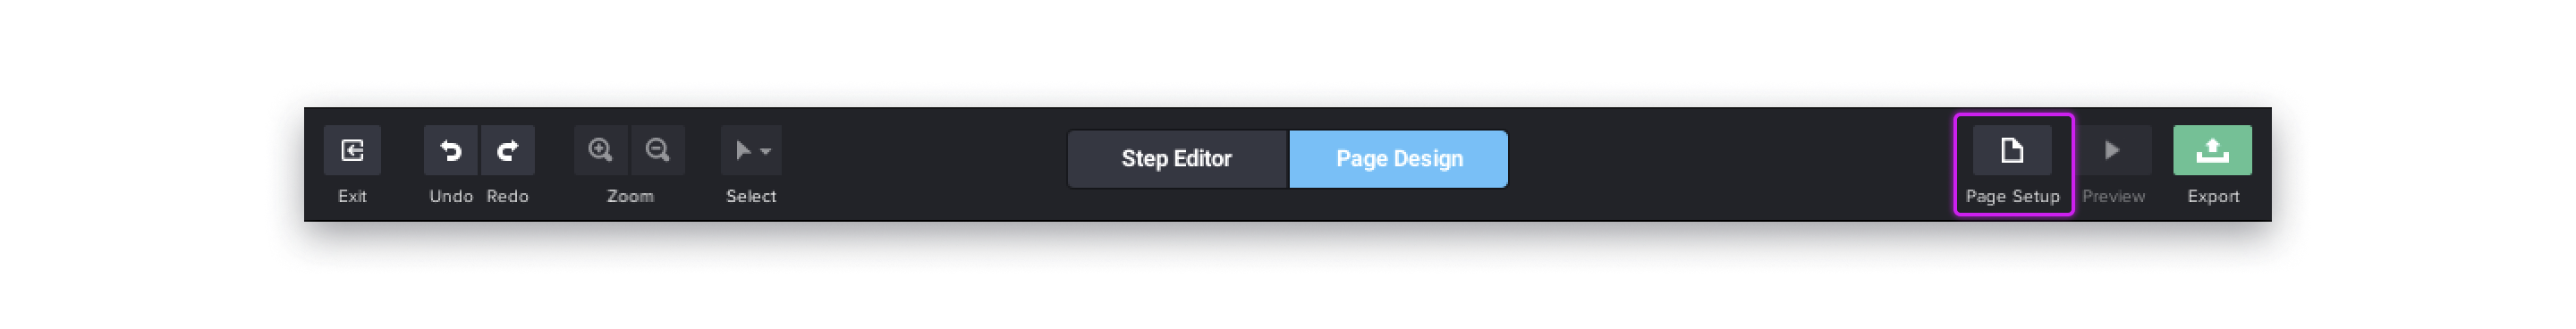 3b._page_design__page_setup_2x.png